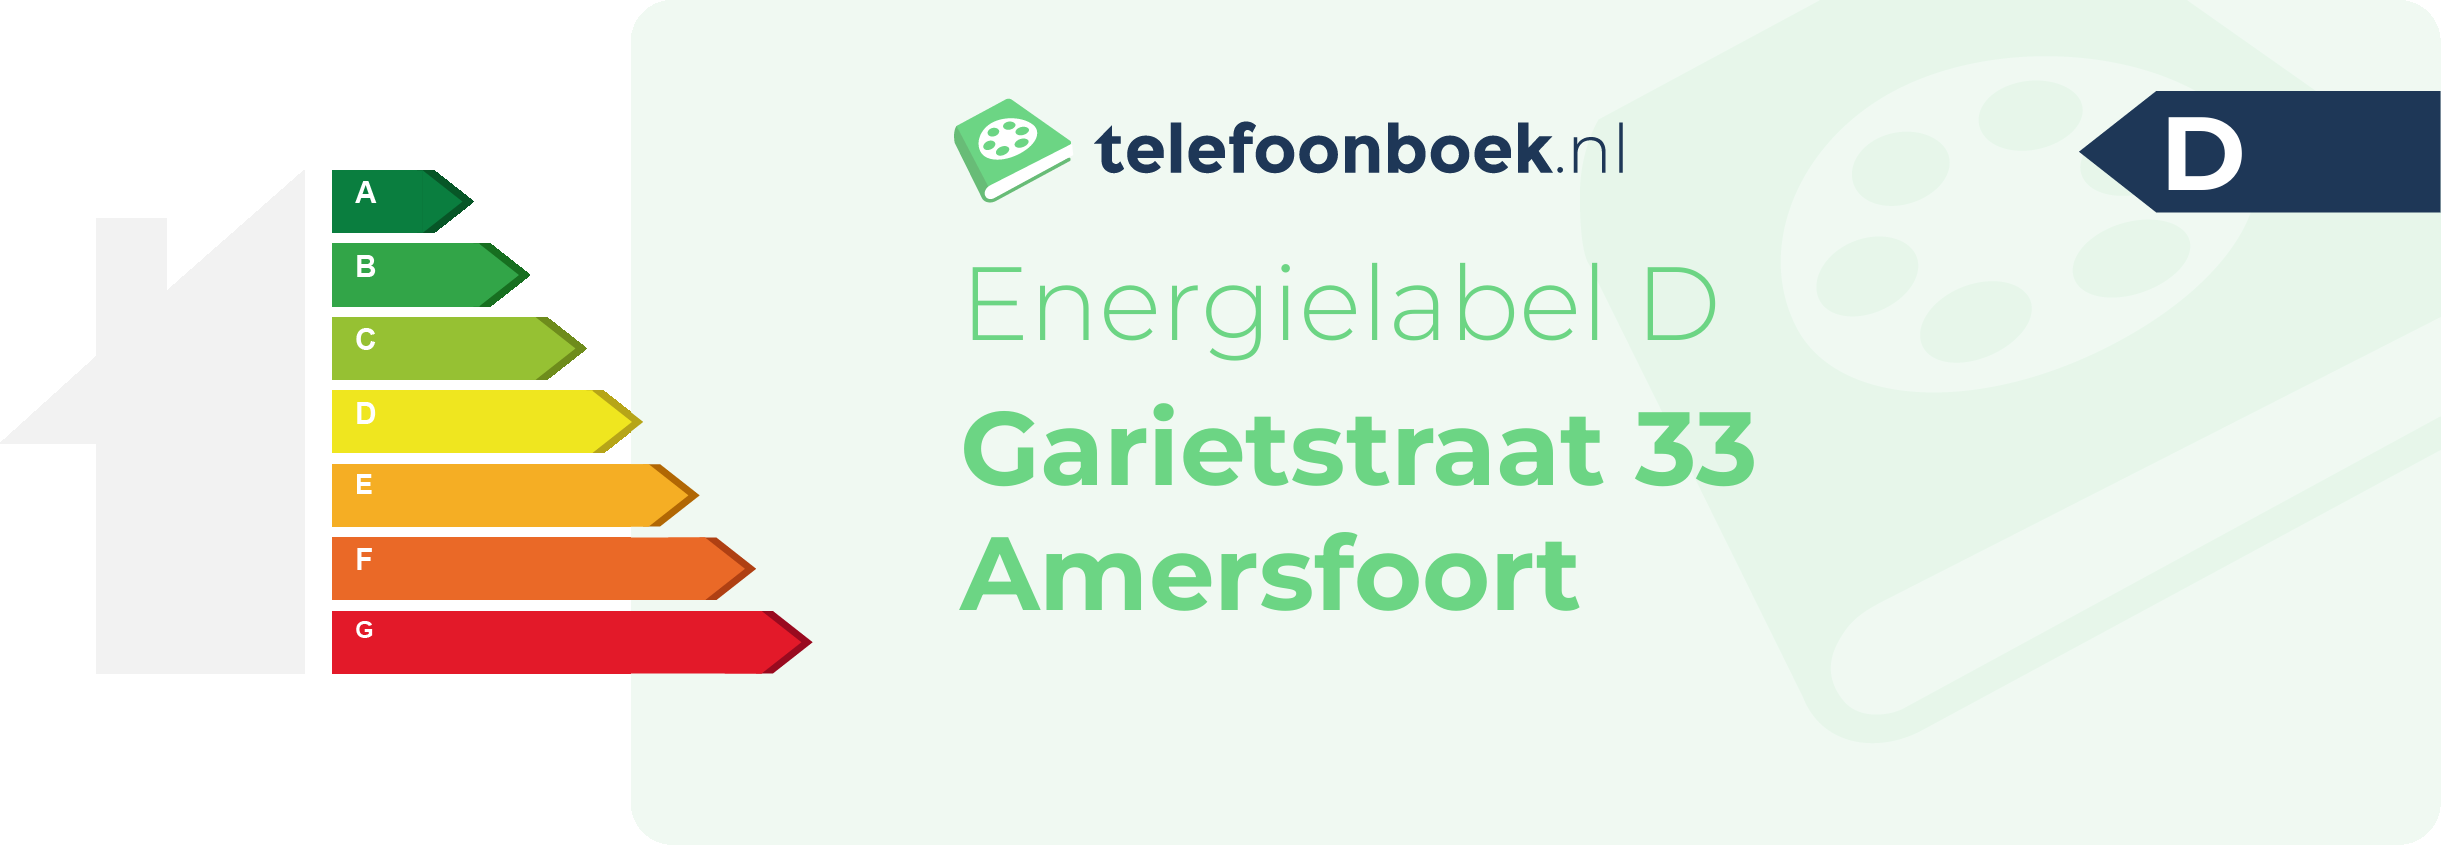 Energielabel Garietstraat 33 Amersfoort